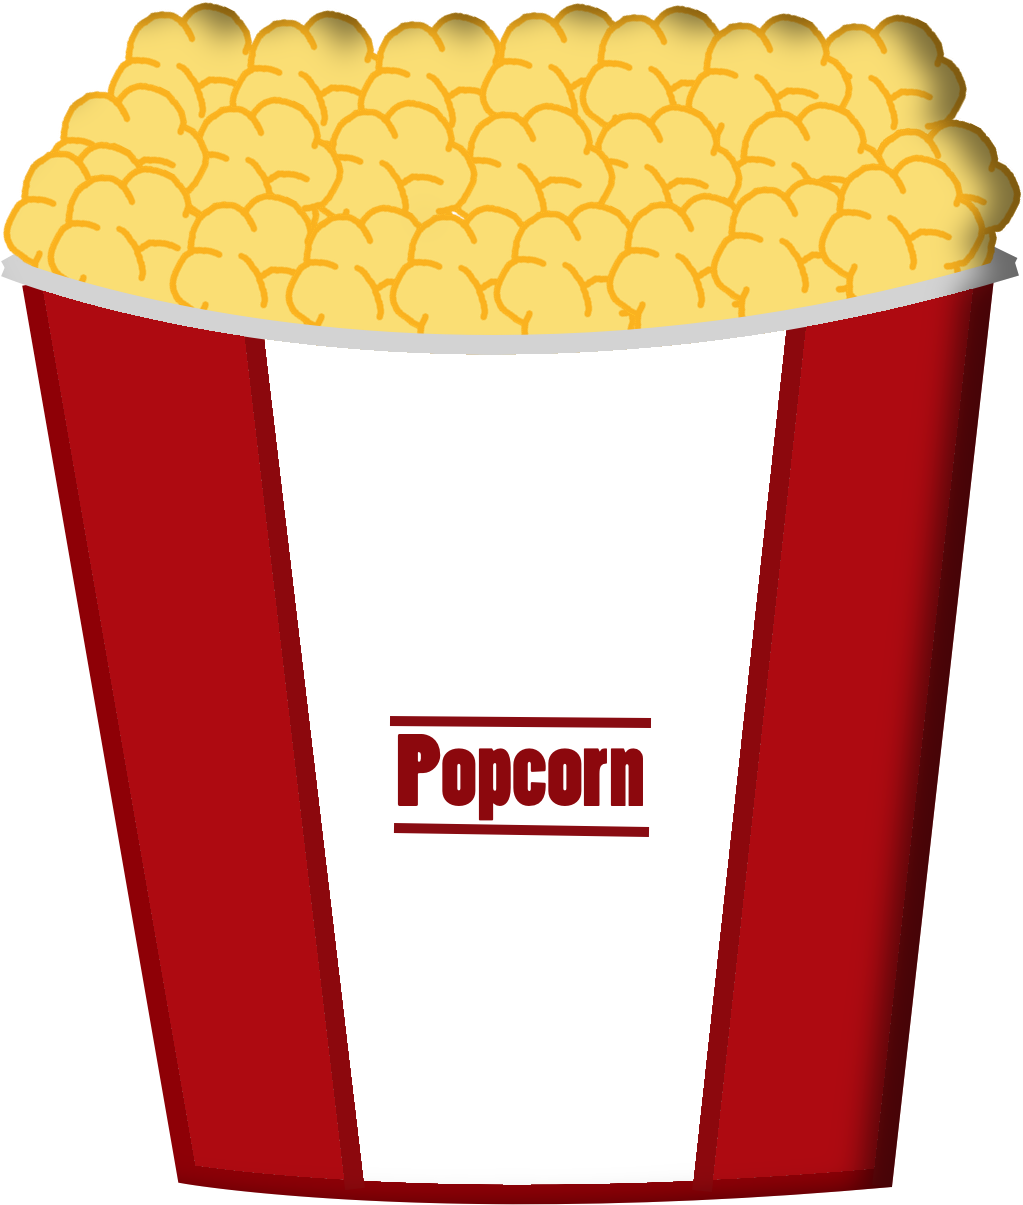 Popcorn Png - Bfdi Popcorn (1023x1205), Png Download